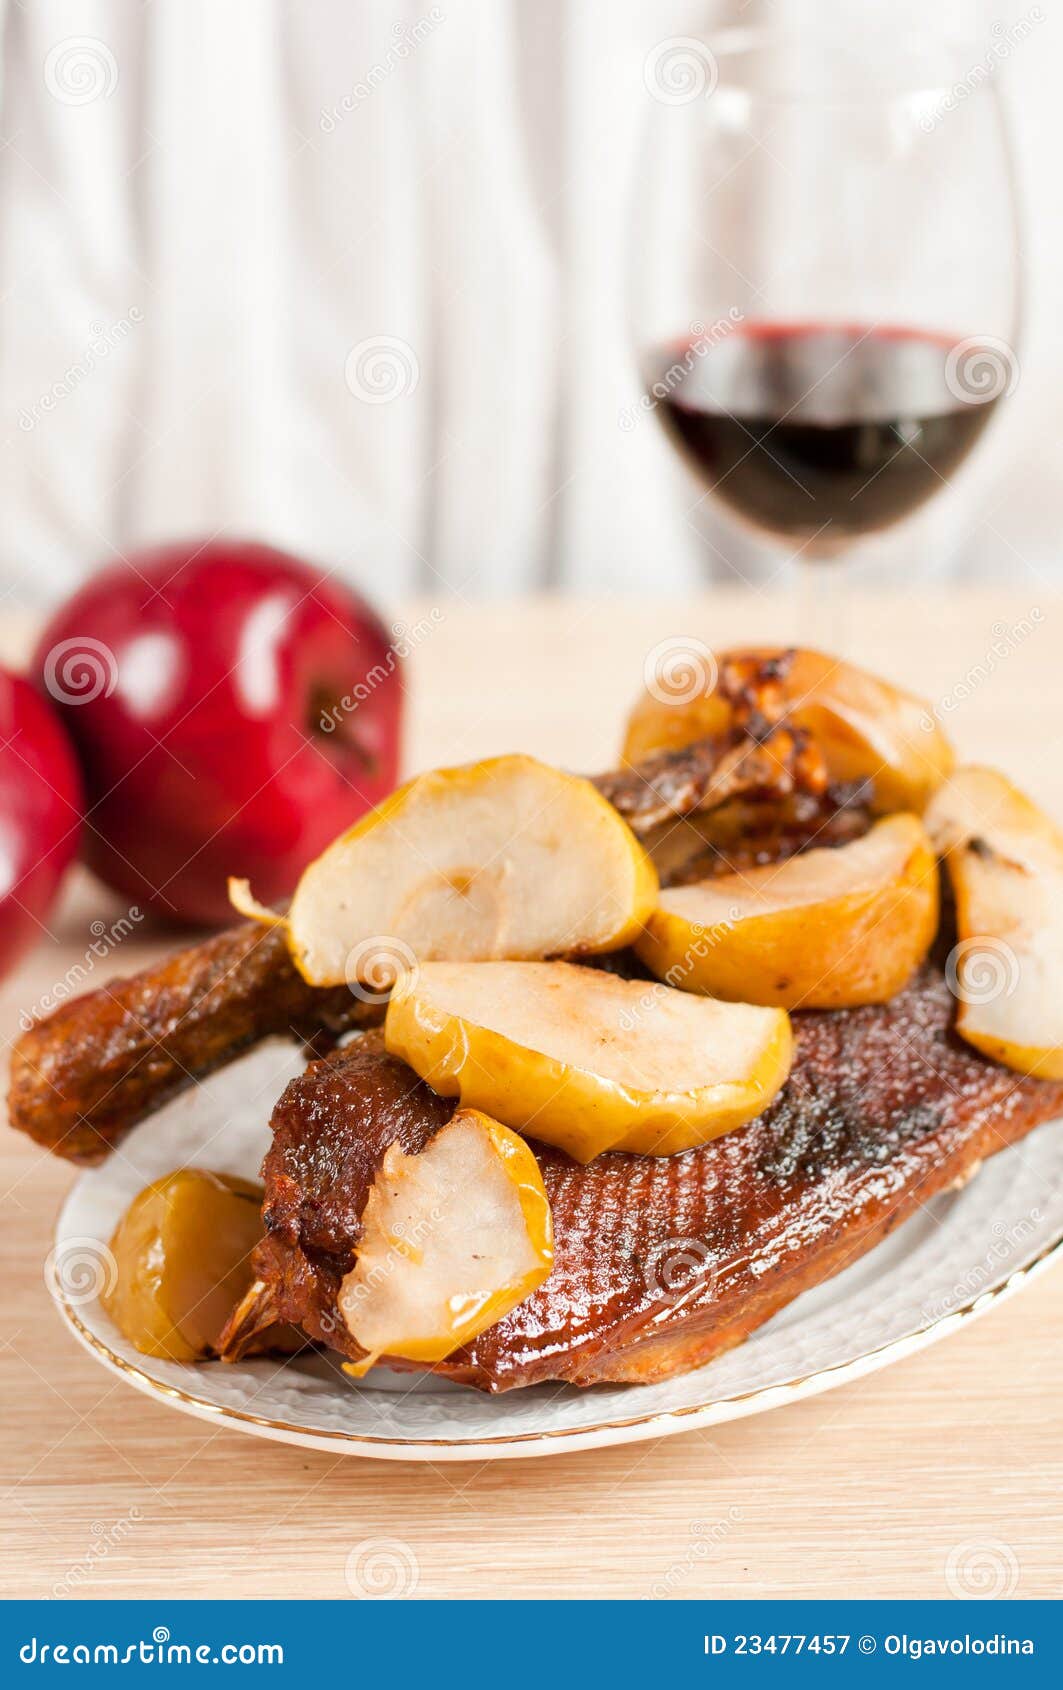 Roast goose with apple stock image. Image of apples, handmade - 23477457